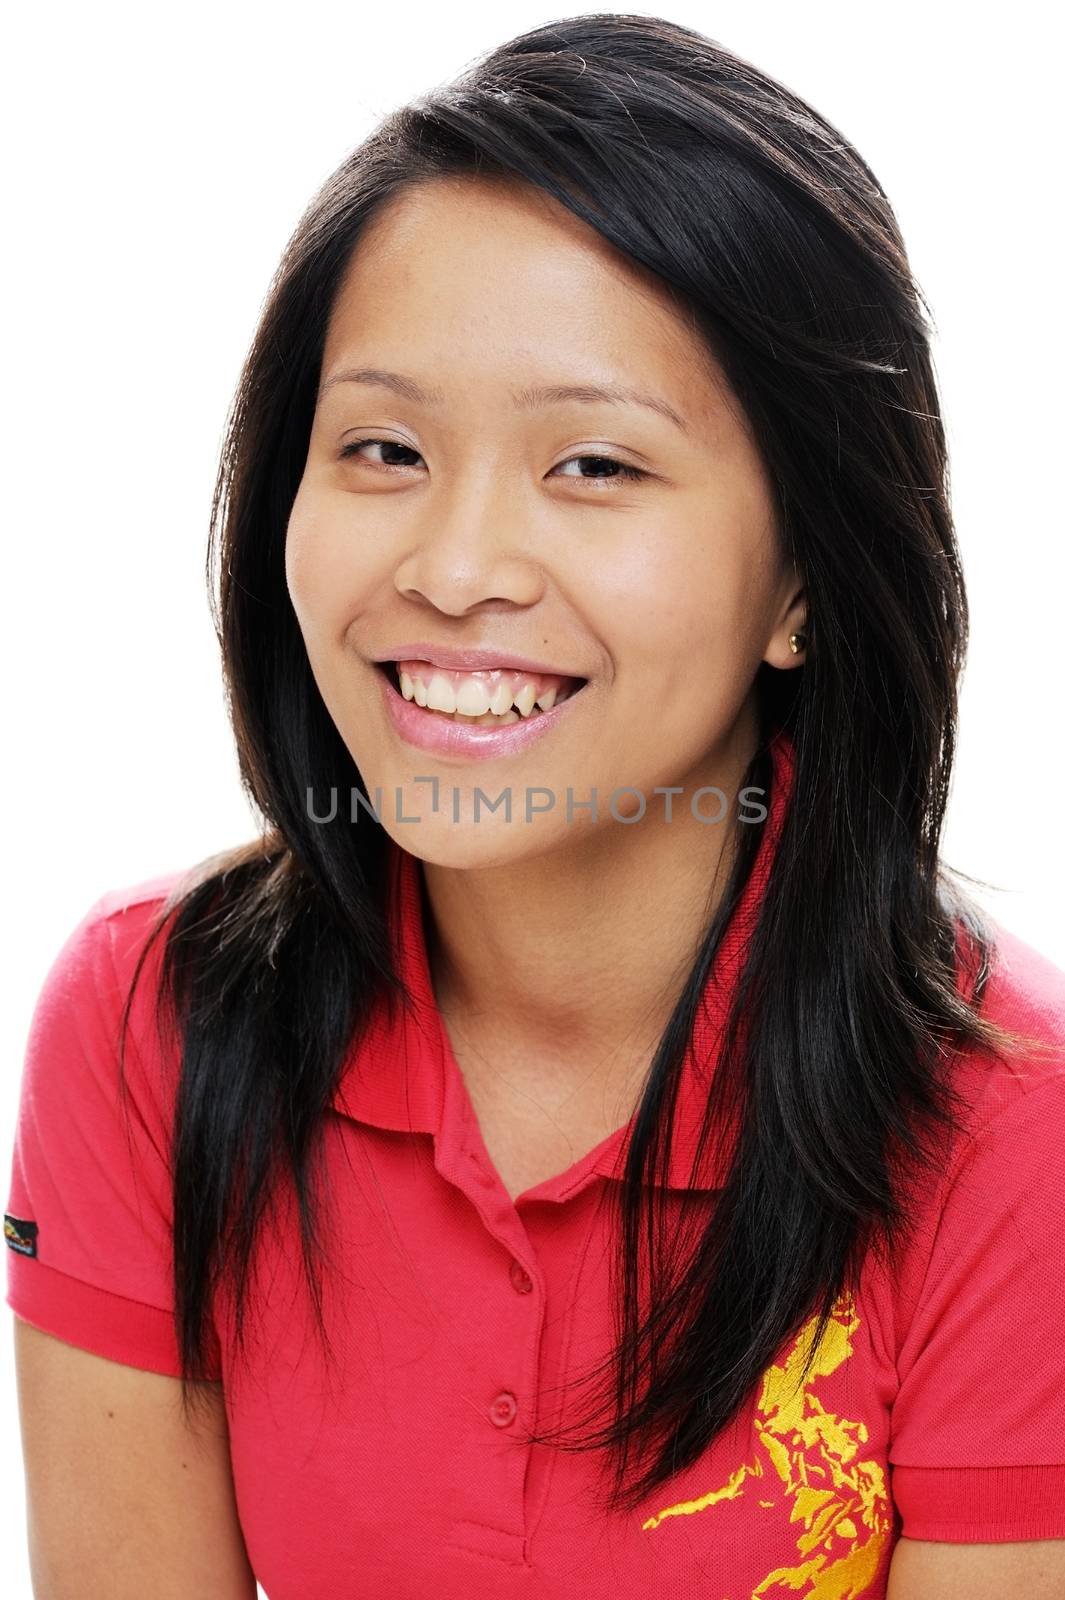 Smiling asian woman wearing red shirt